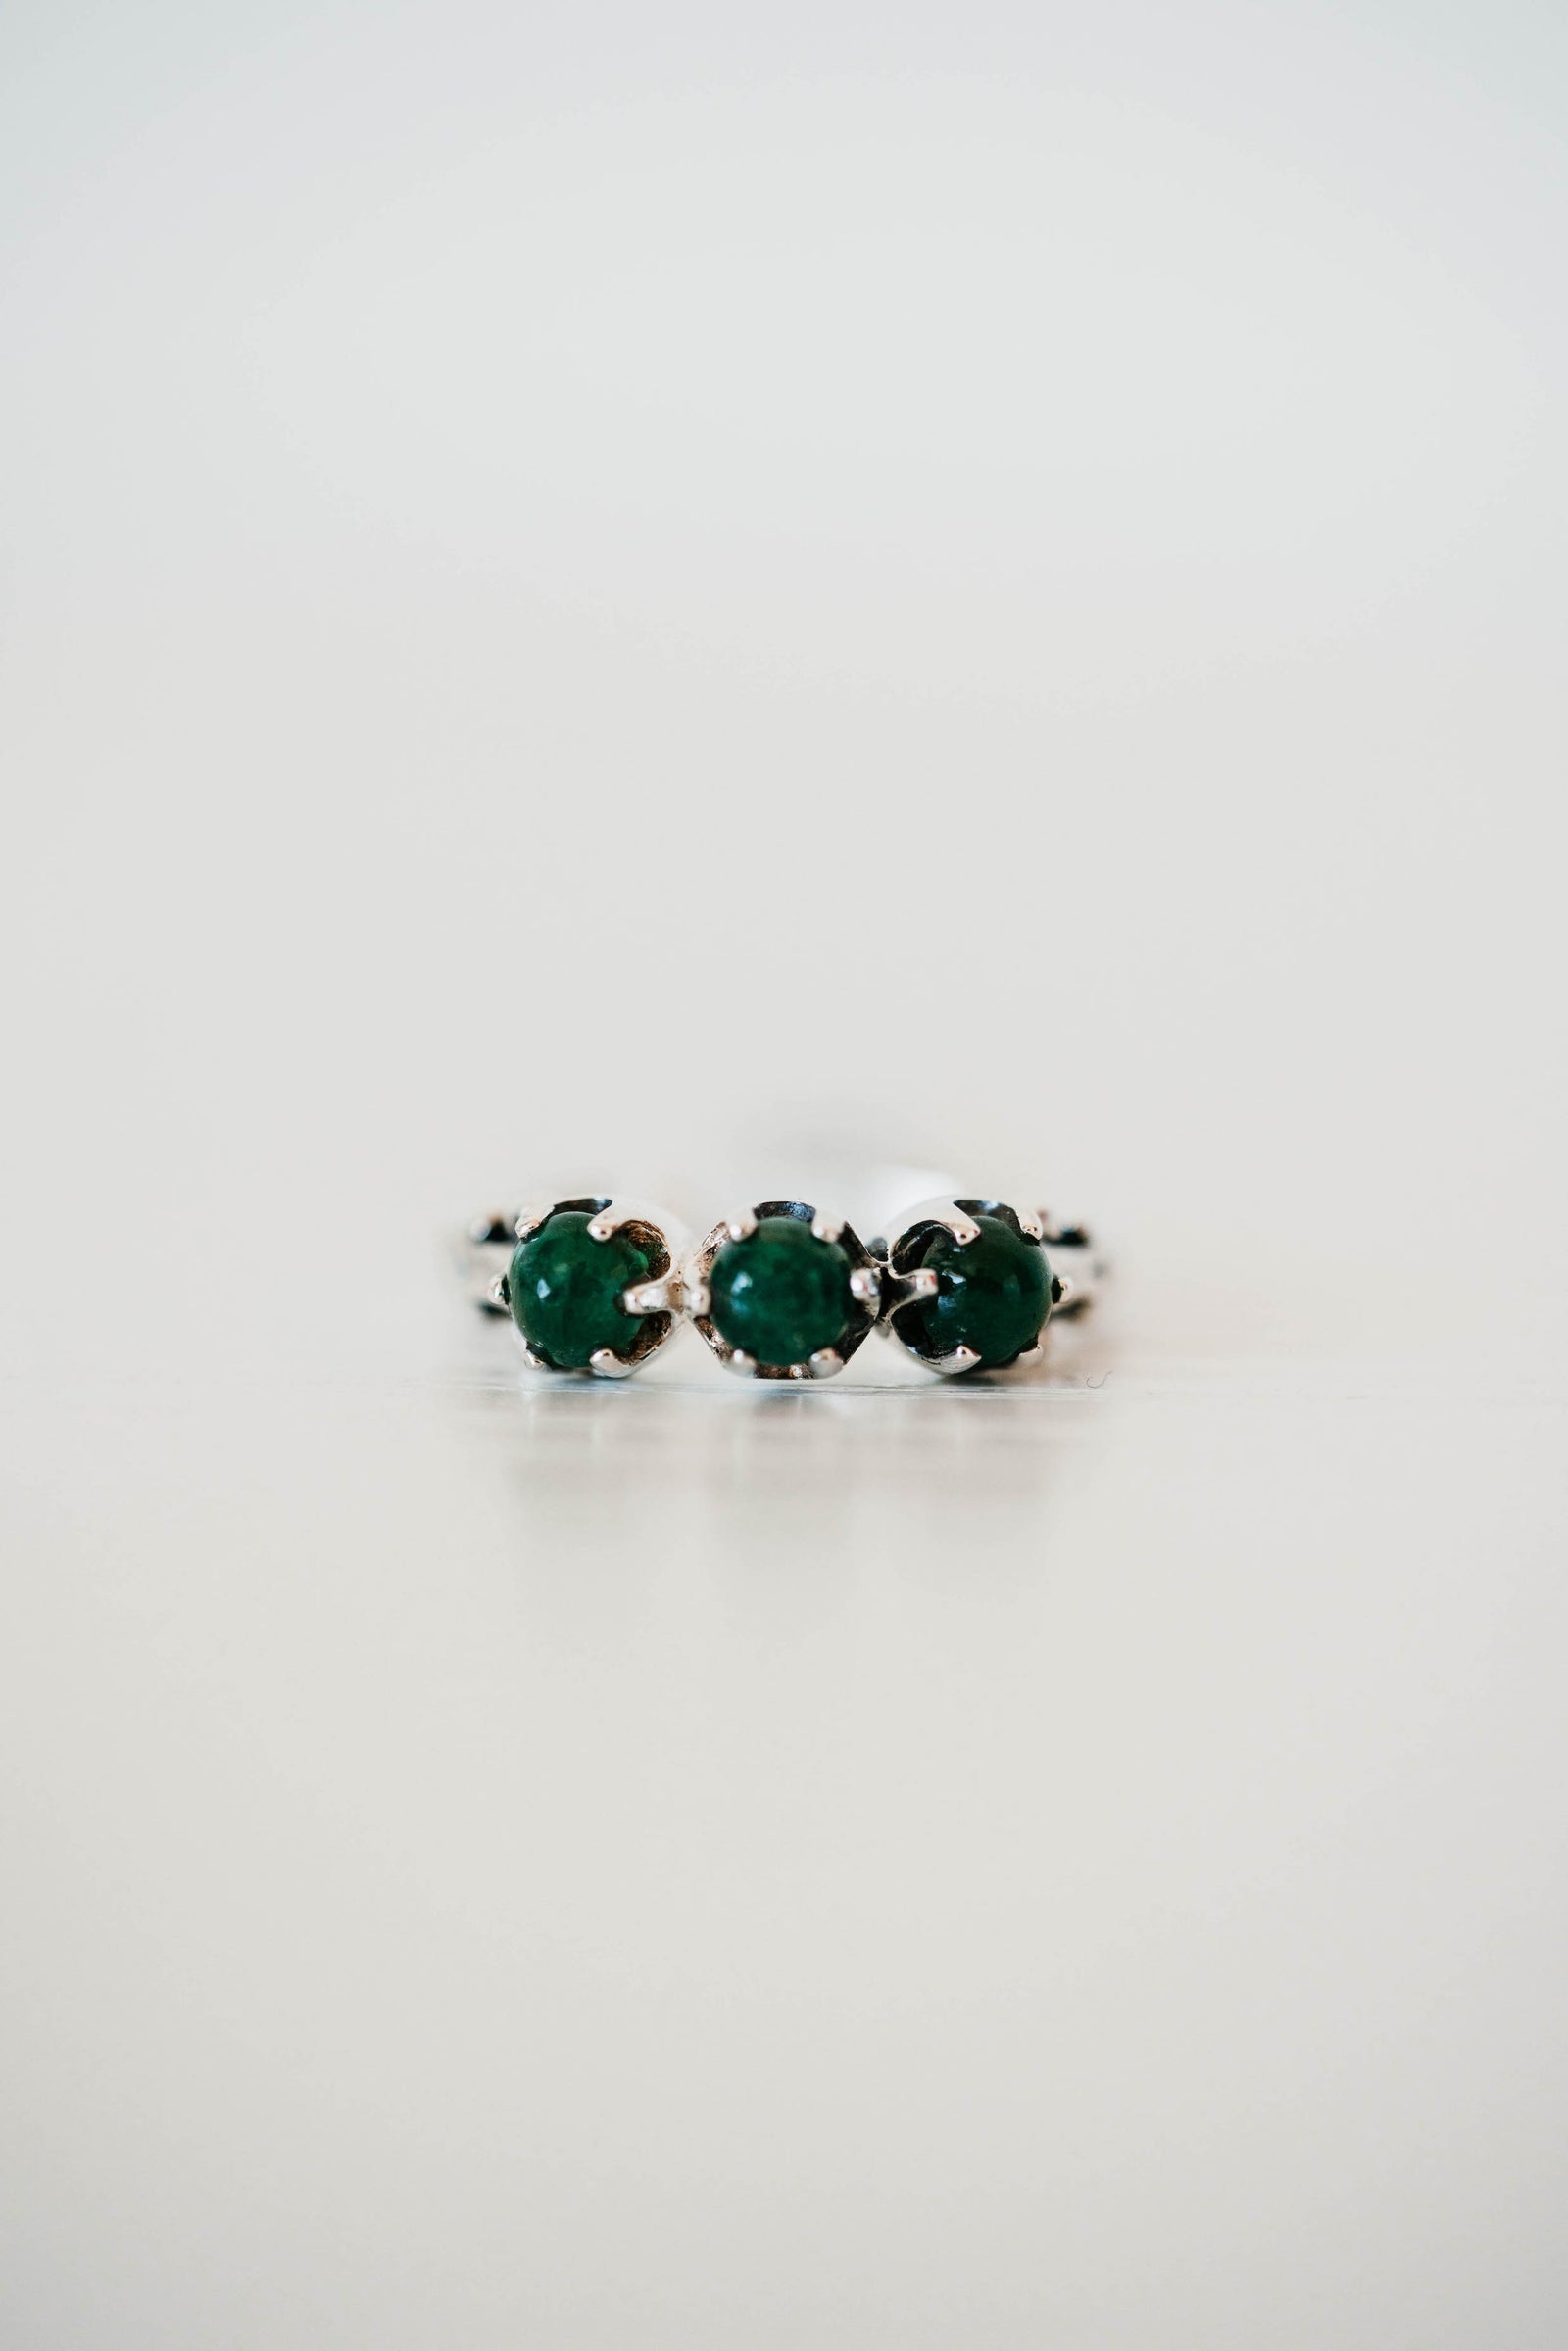 Patrick Ring | Emerald